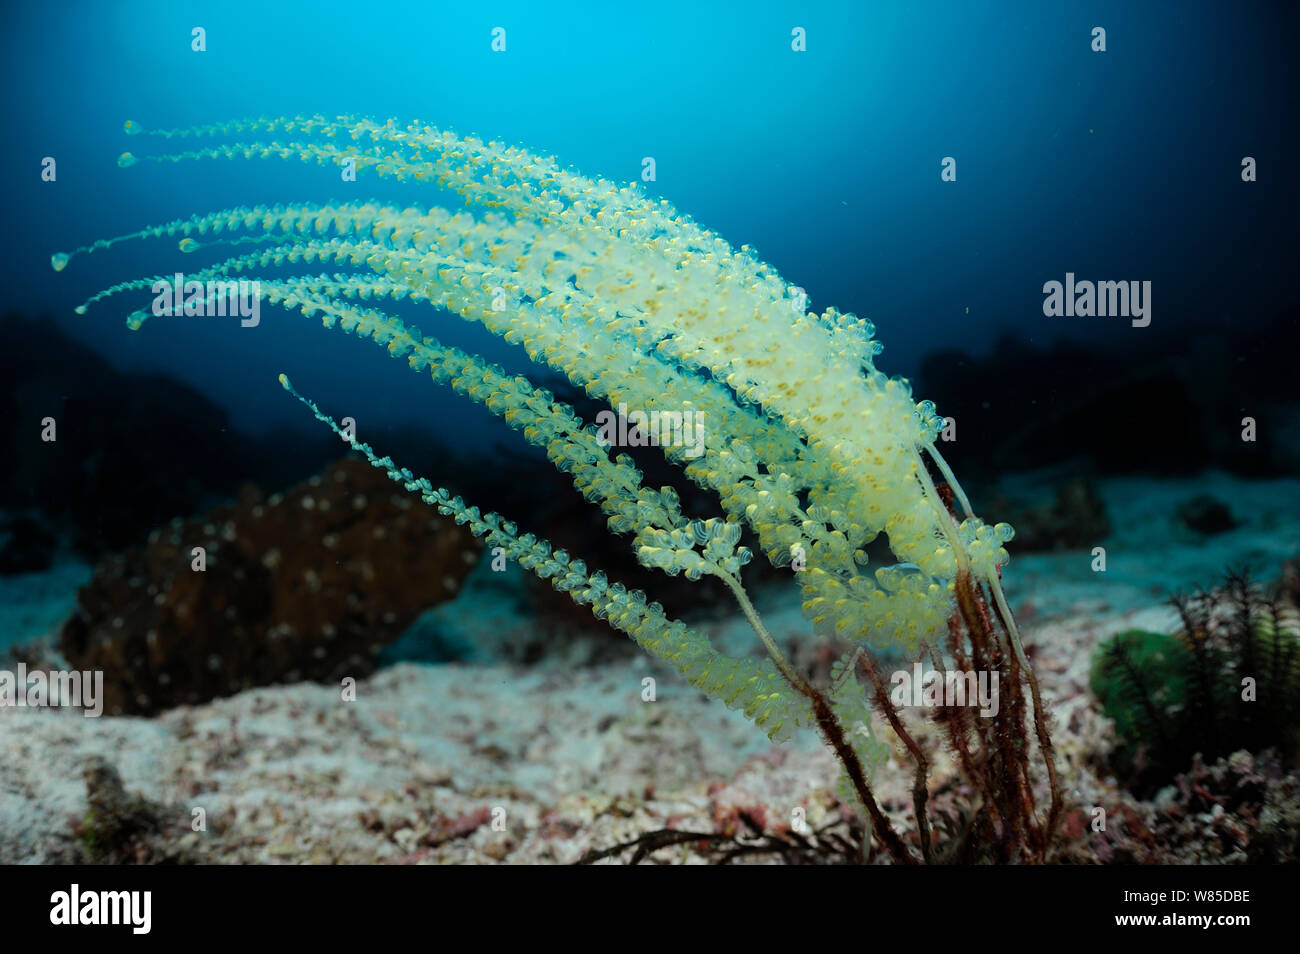 Colonial ascidians (Perophora namei) Raja Ampat, West Papua, Indonesia, Pacific Ocean. Stock Photo